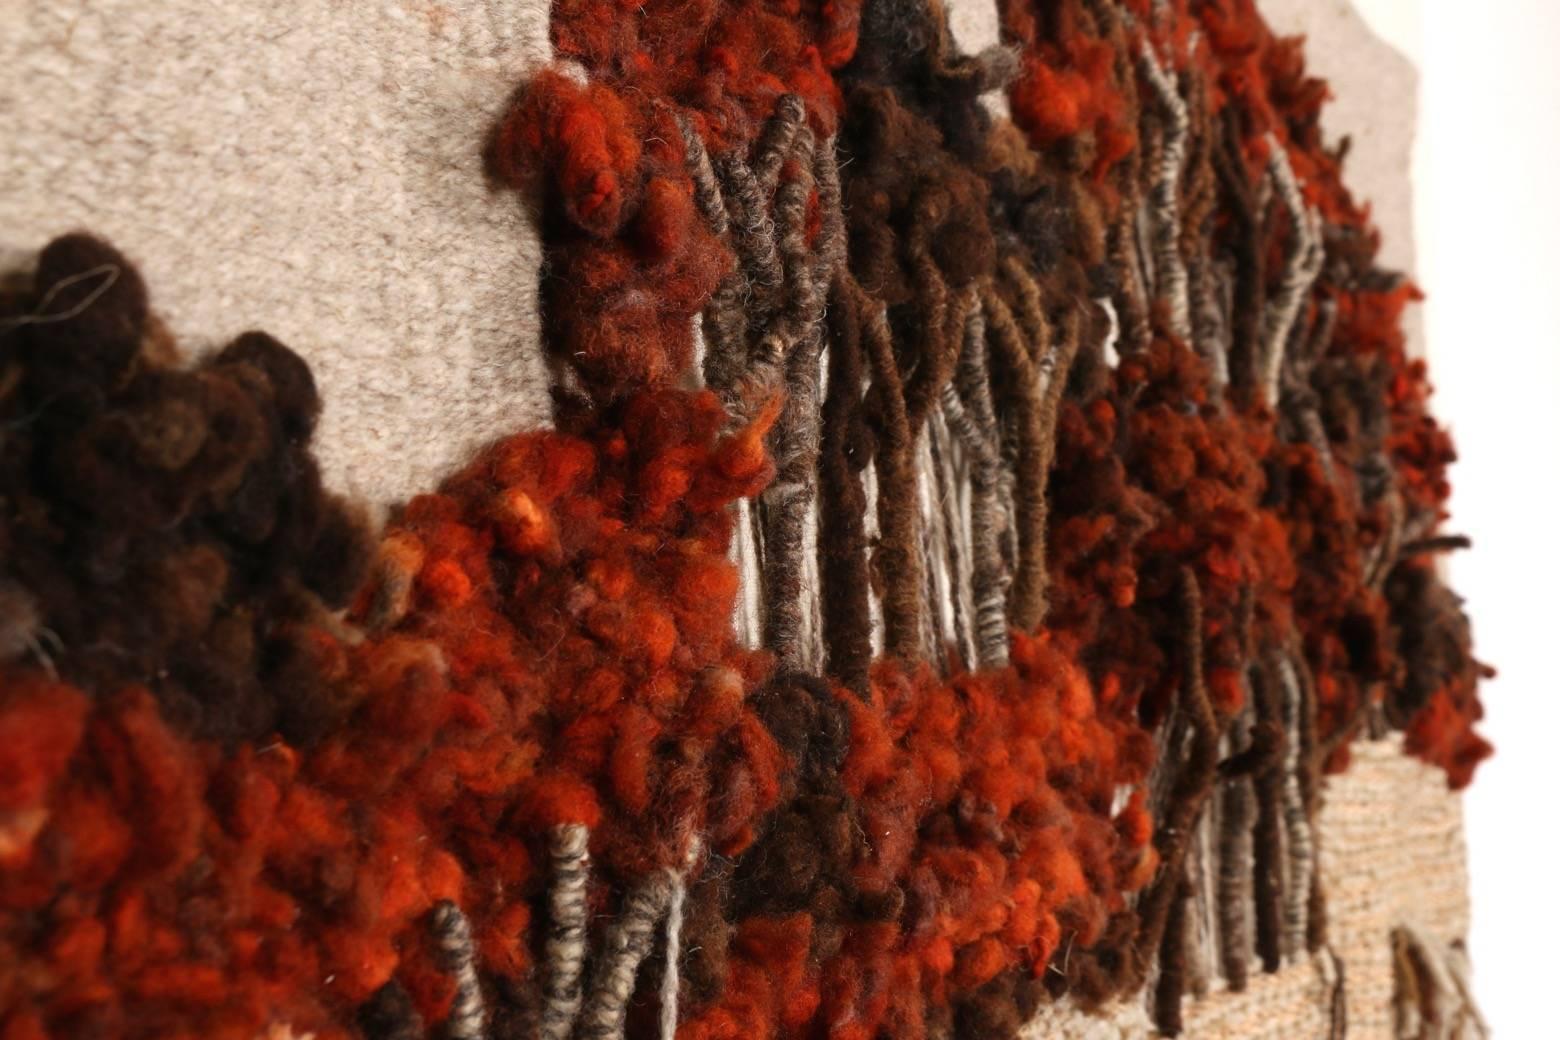 Cotton Mid-Century Fiber Art Wall Sculpture Weaving, Woven Forest of Trees